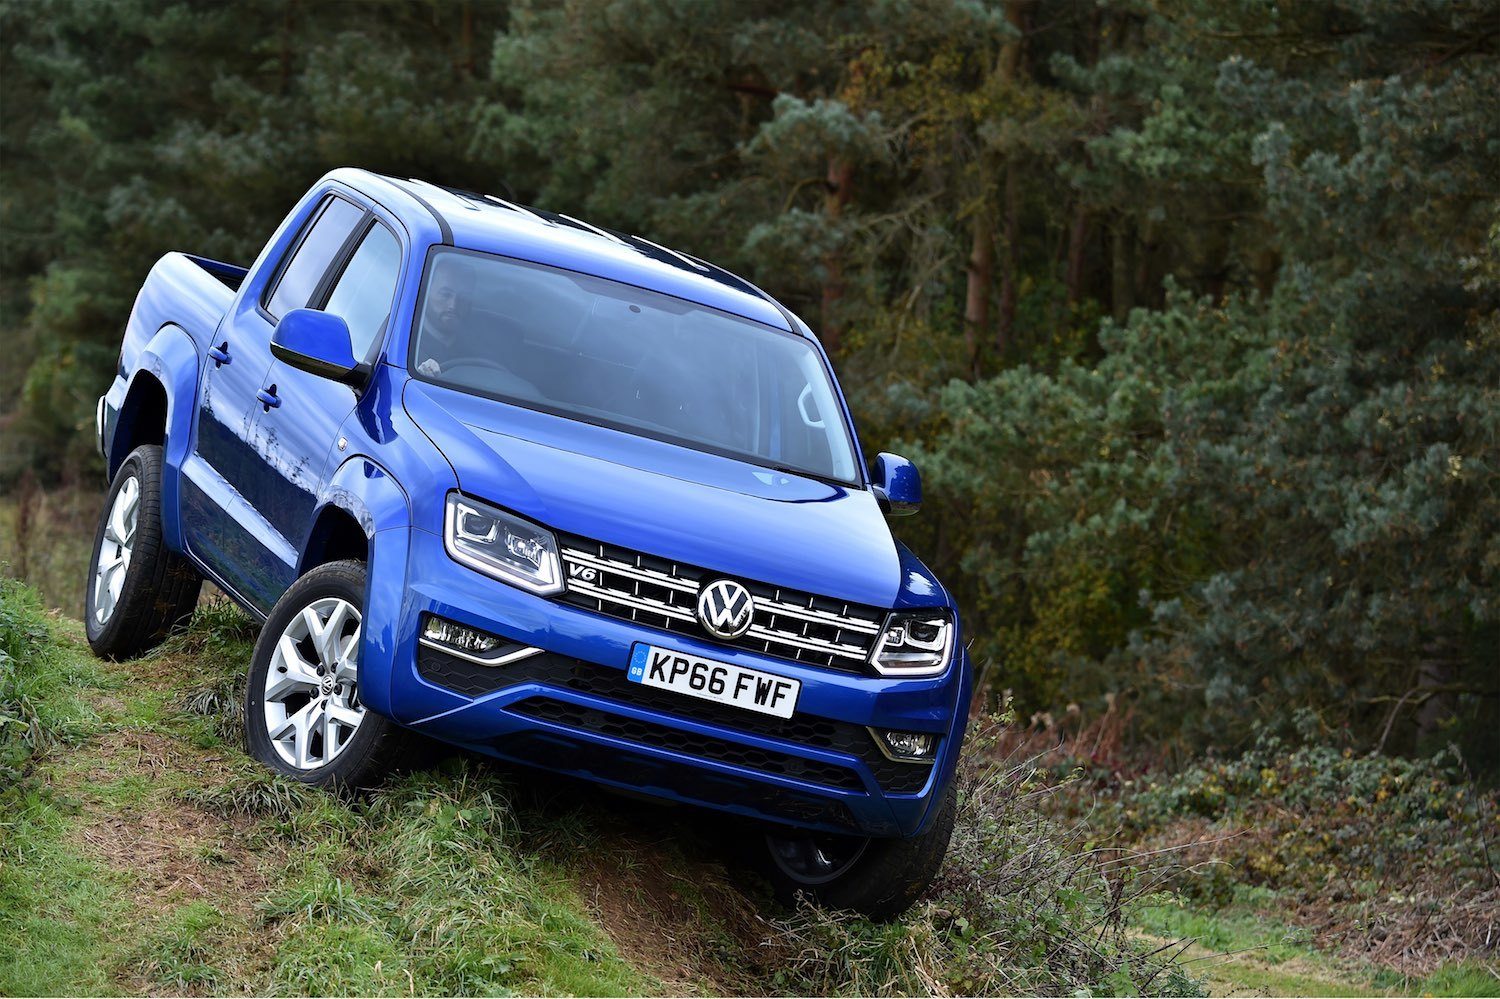 Neil Lyndon reviews the latest Volkswagen Amarok 21